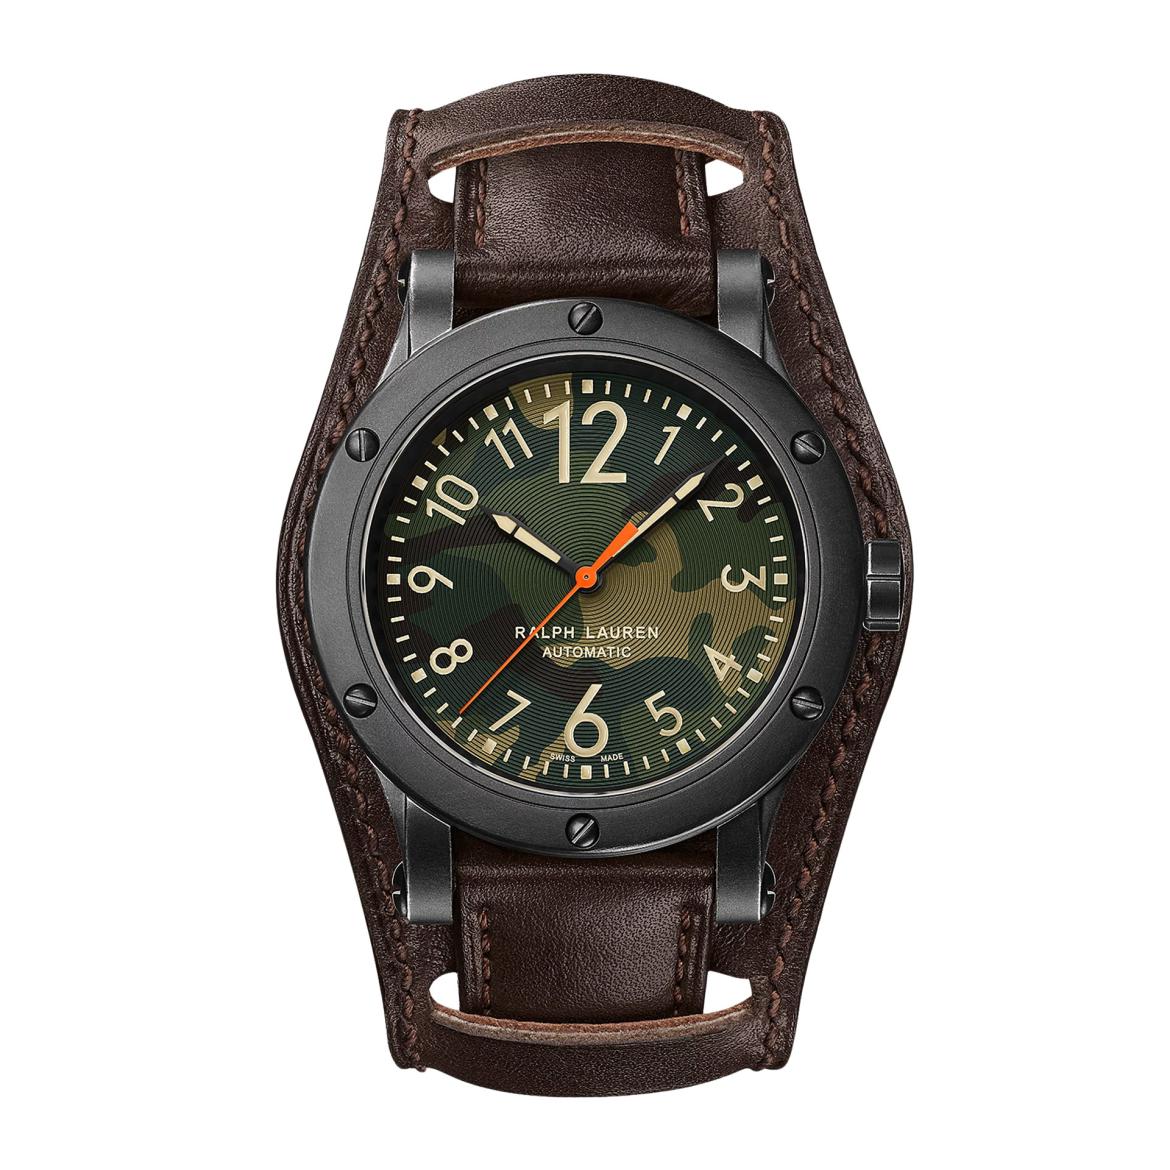 Ralph Lauren Safari Chronometer 42 mm ref. 46892126900x